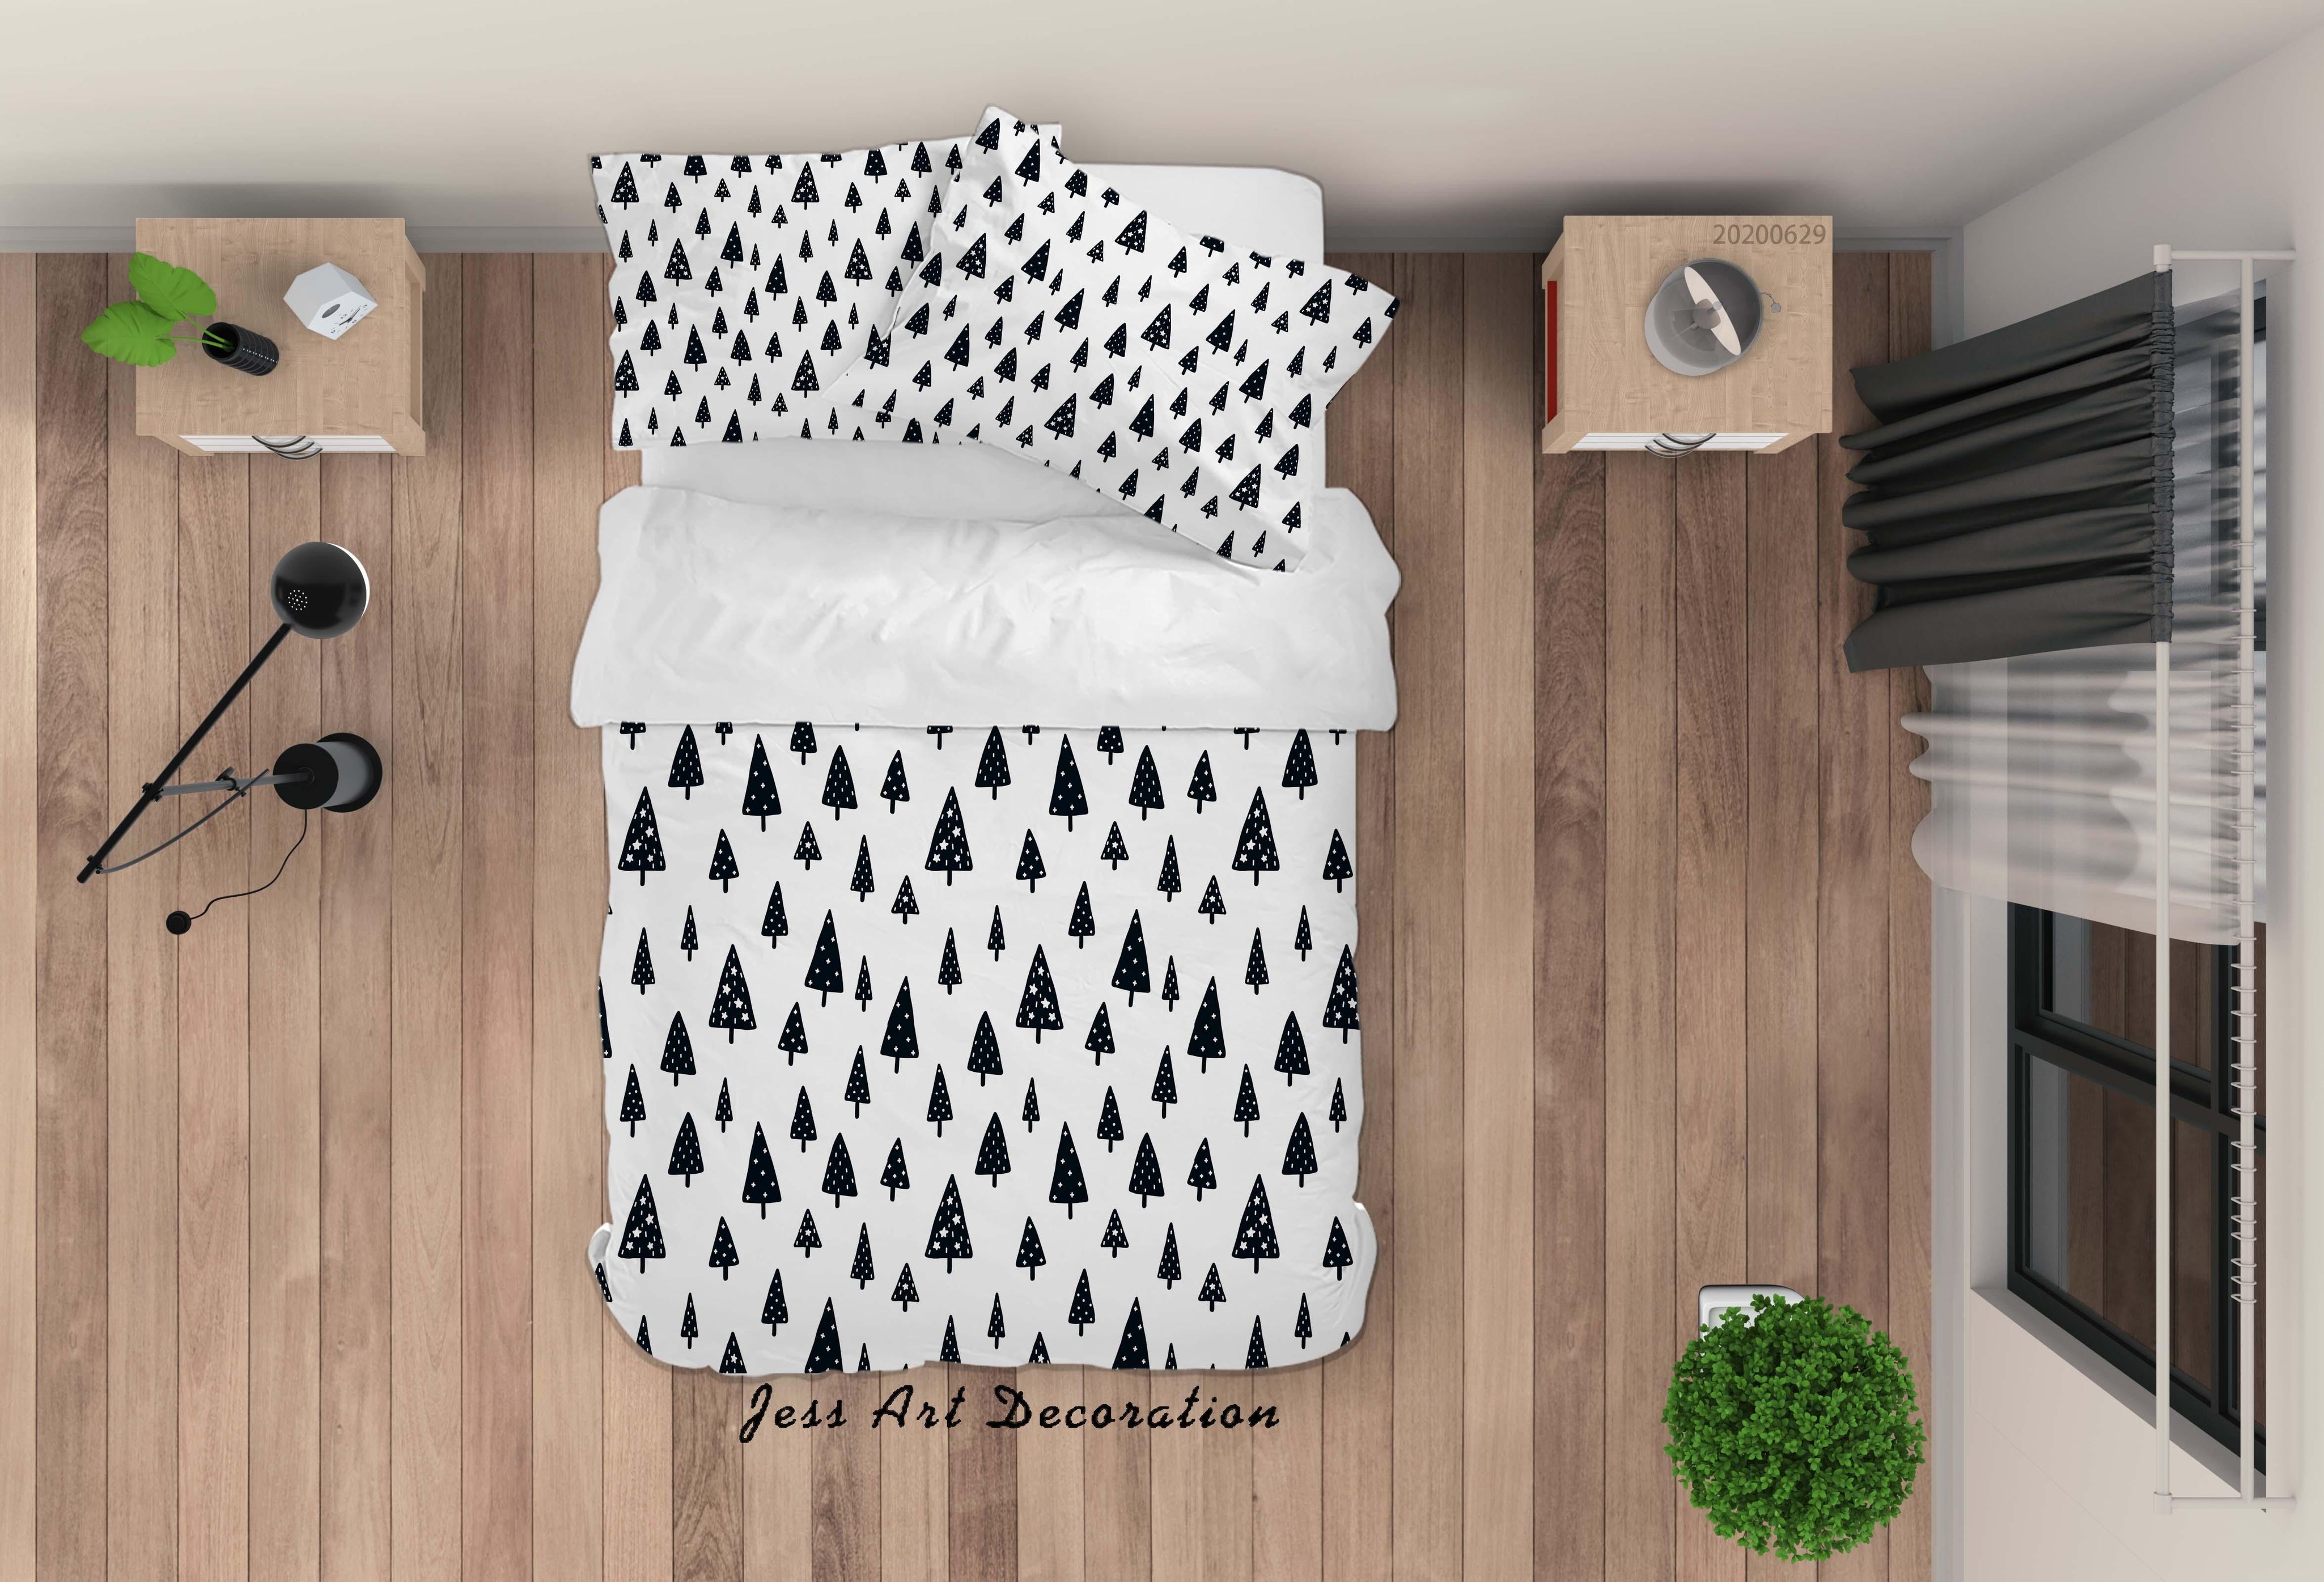 3D White Black Trees Quilt Cover Set Bedding Set Duvet Cover Pillowcases SF80- Jess Art Decoration